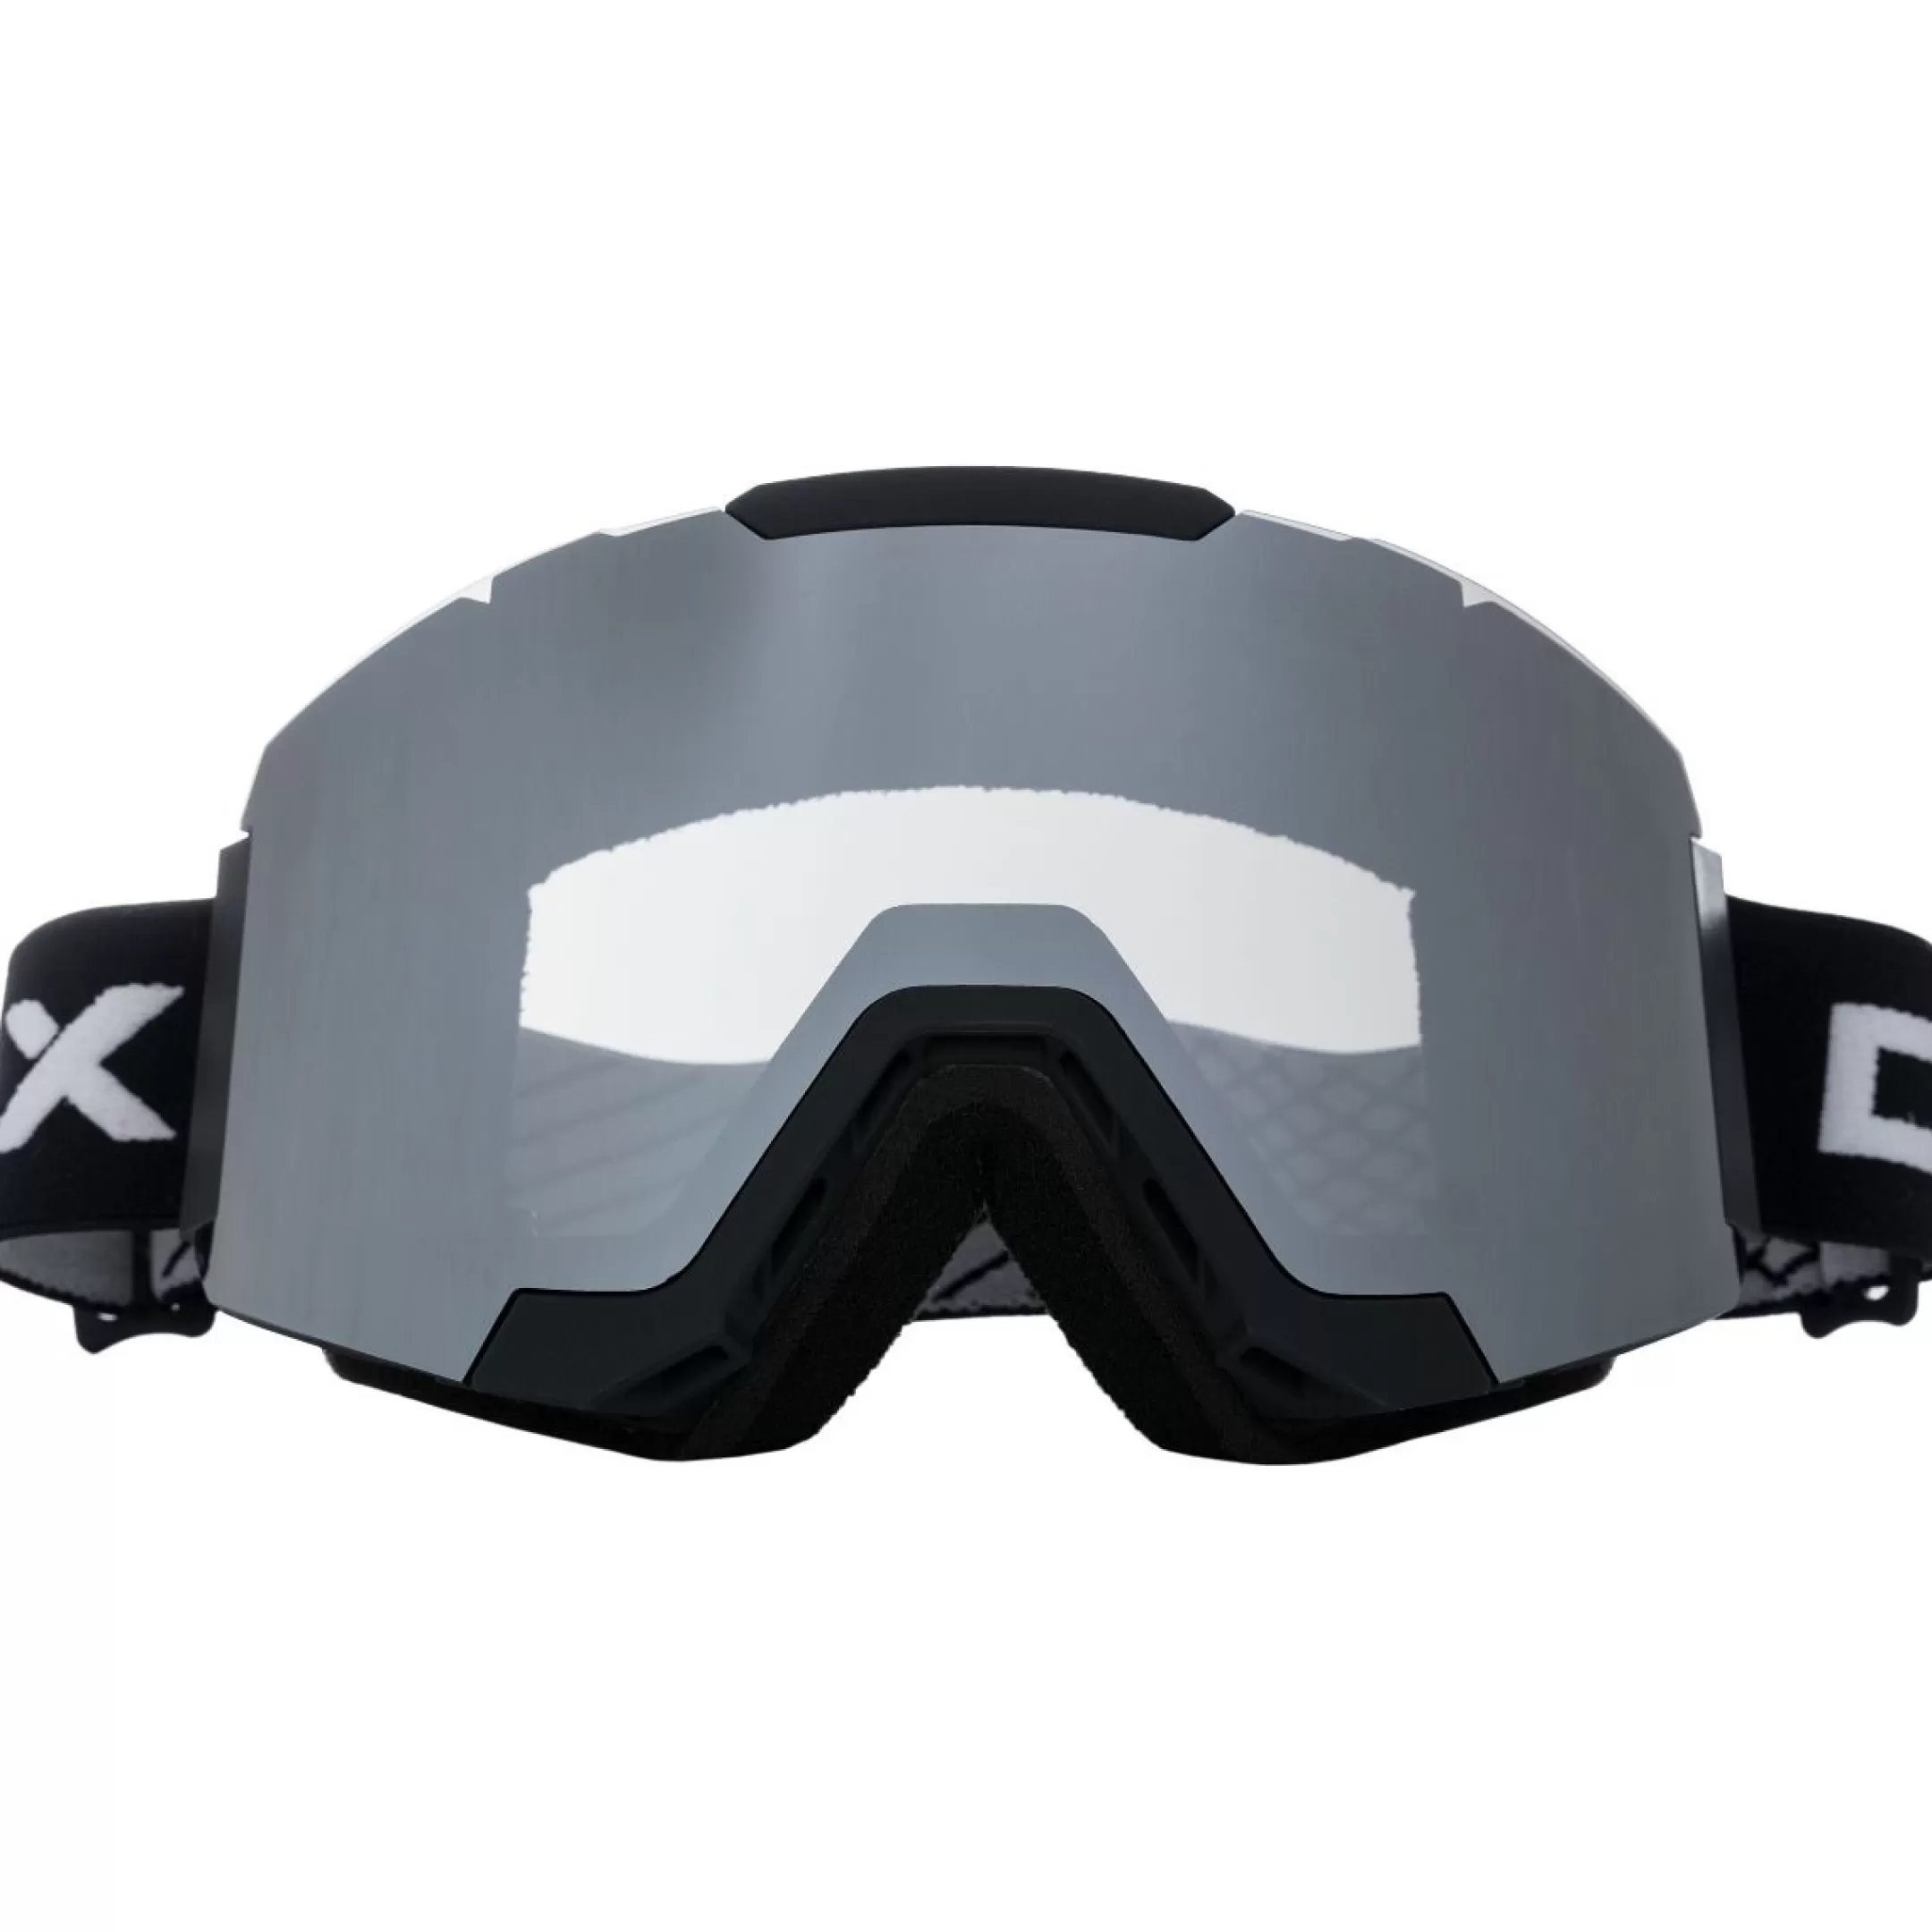 DLX Changeable Lens Ski Goggles Magnetic | Trespass Shop